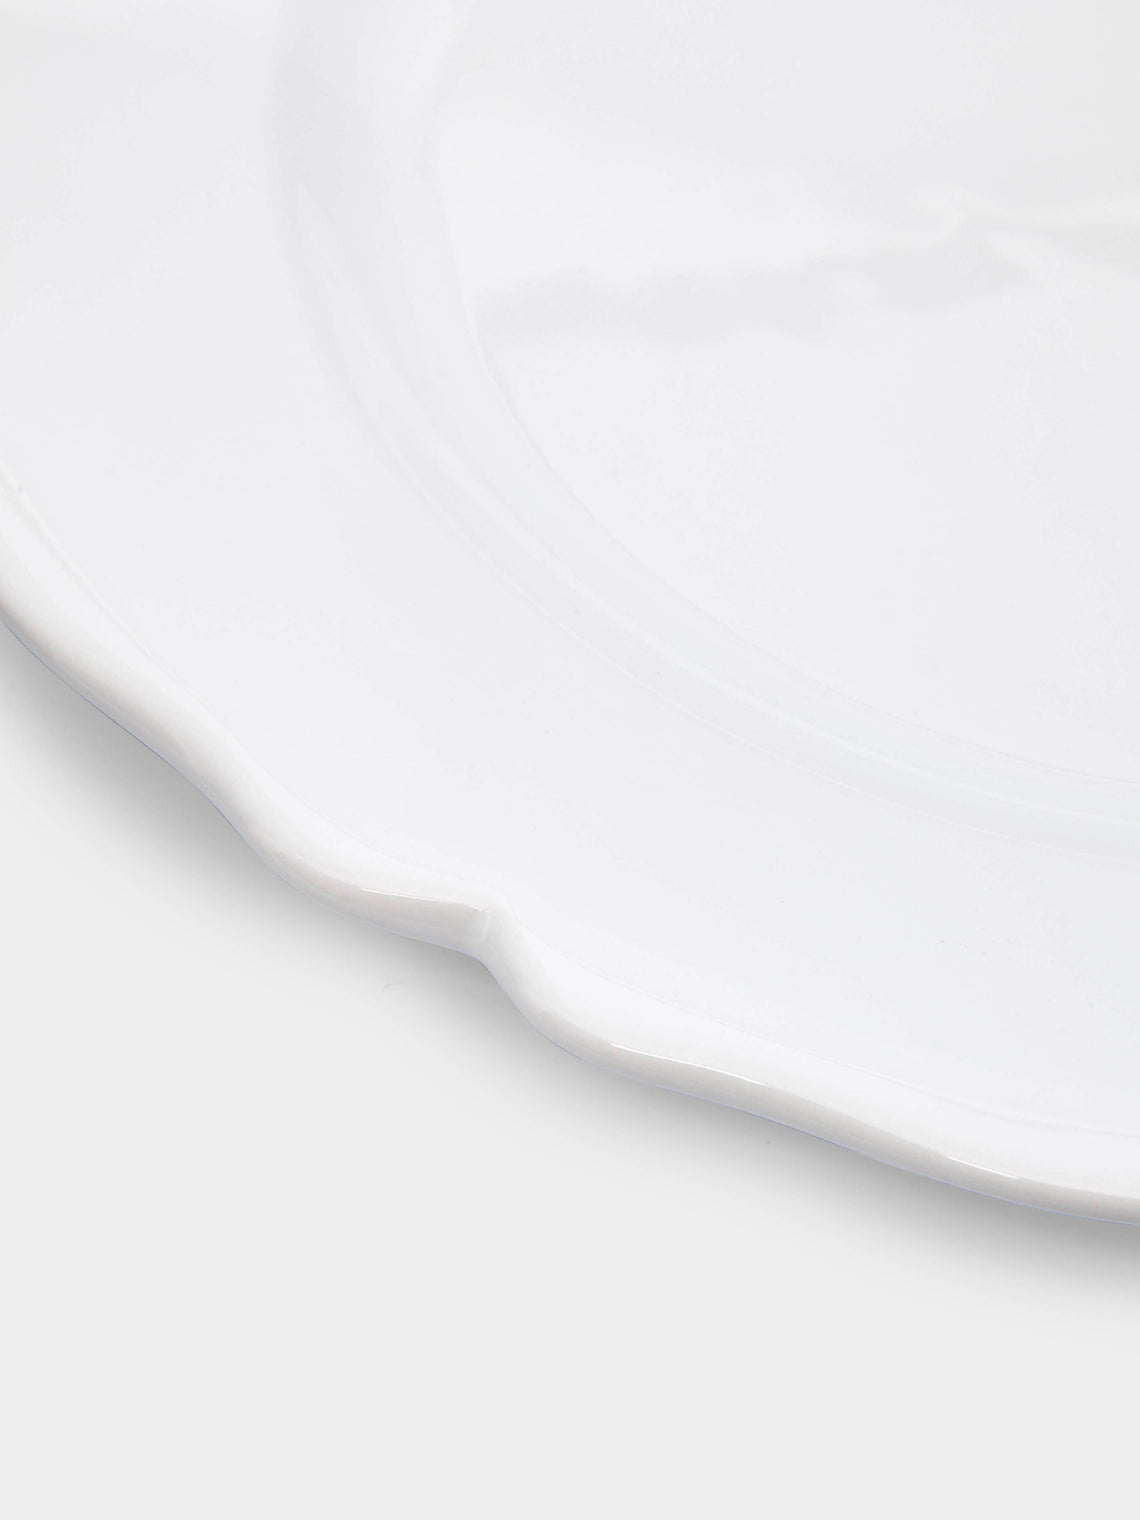 Bourg Joly Malicorne - Festons Ceramic Dinner Plates (Set of 4) -  - ABASK